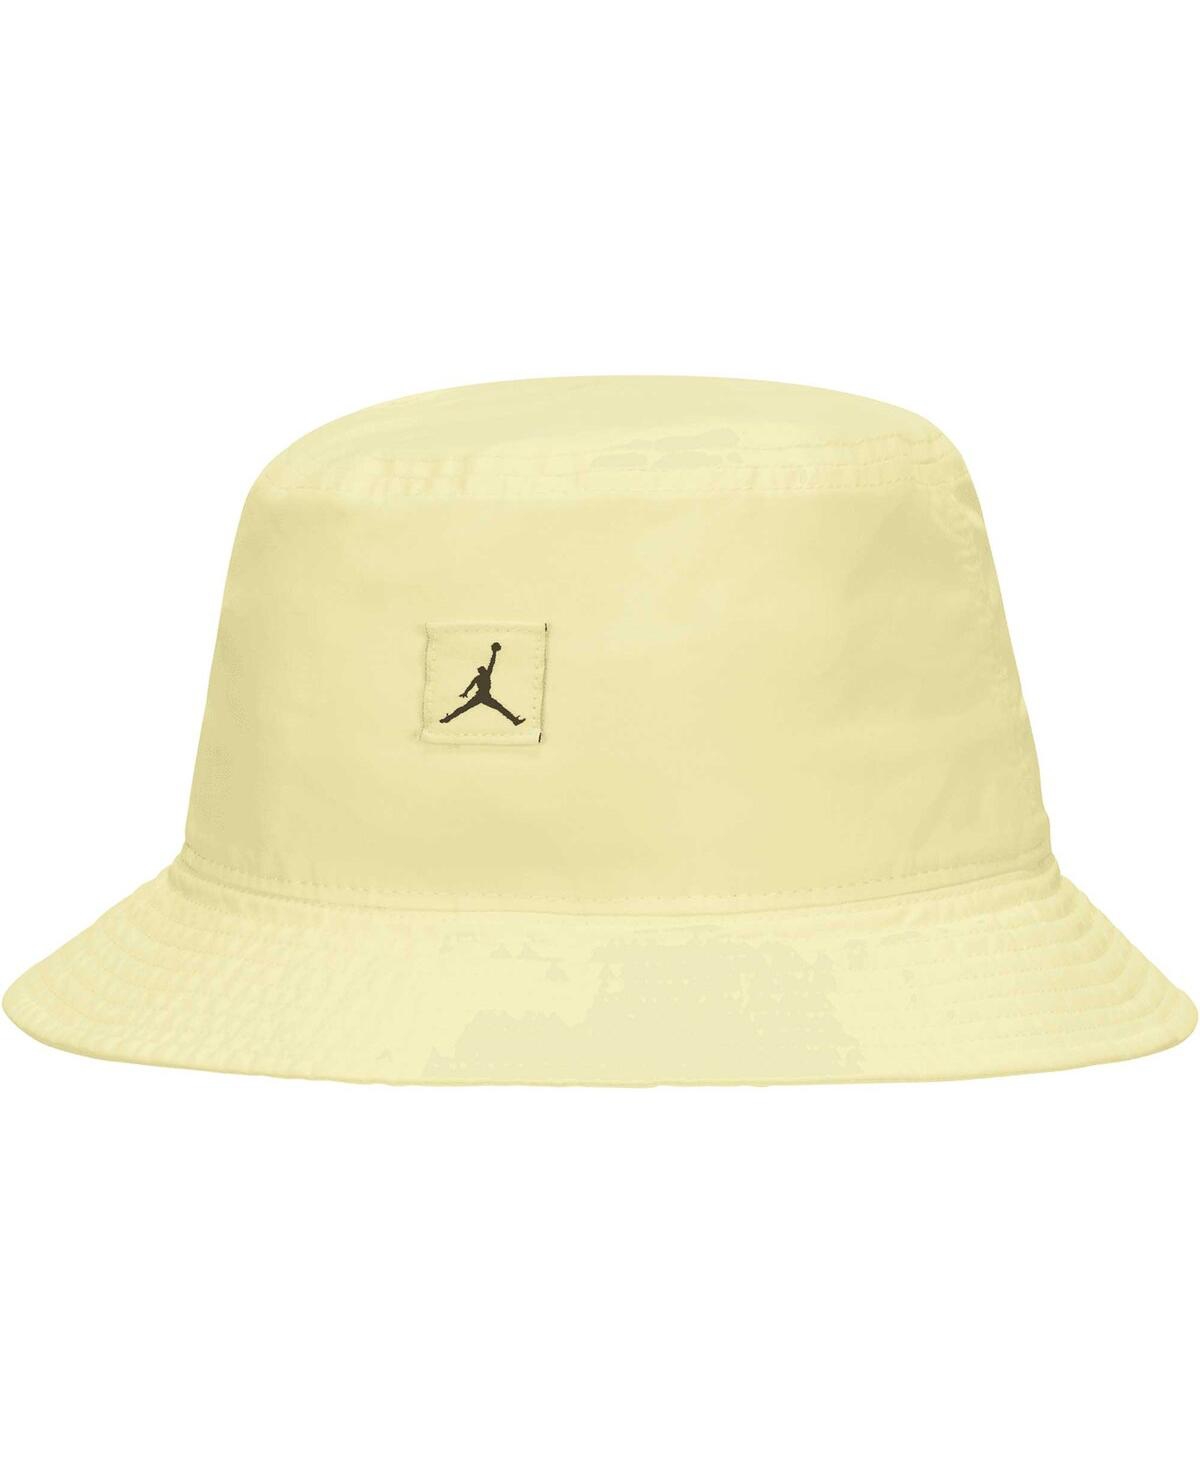 Jordan Men's  Yellowâ Jumpman Washed Bucket Hat